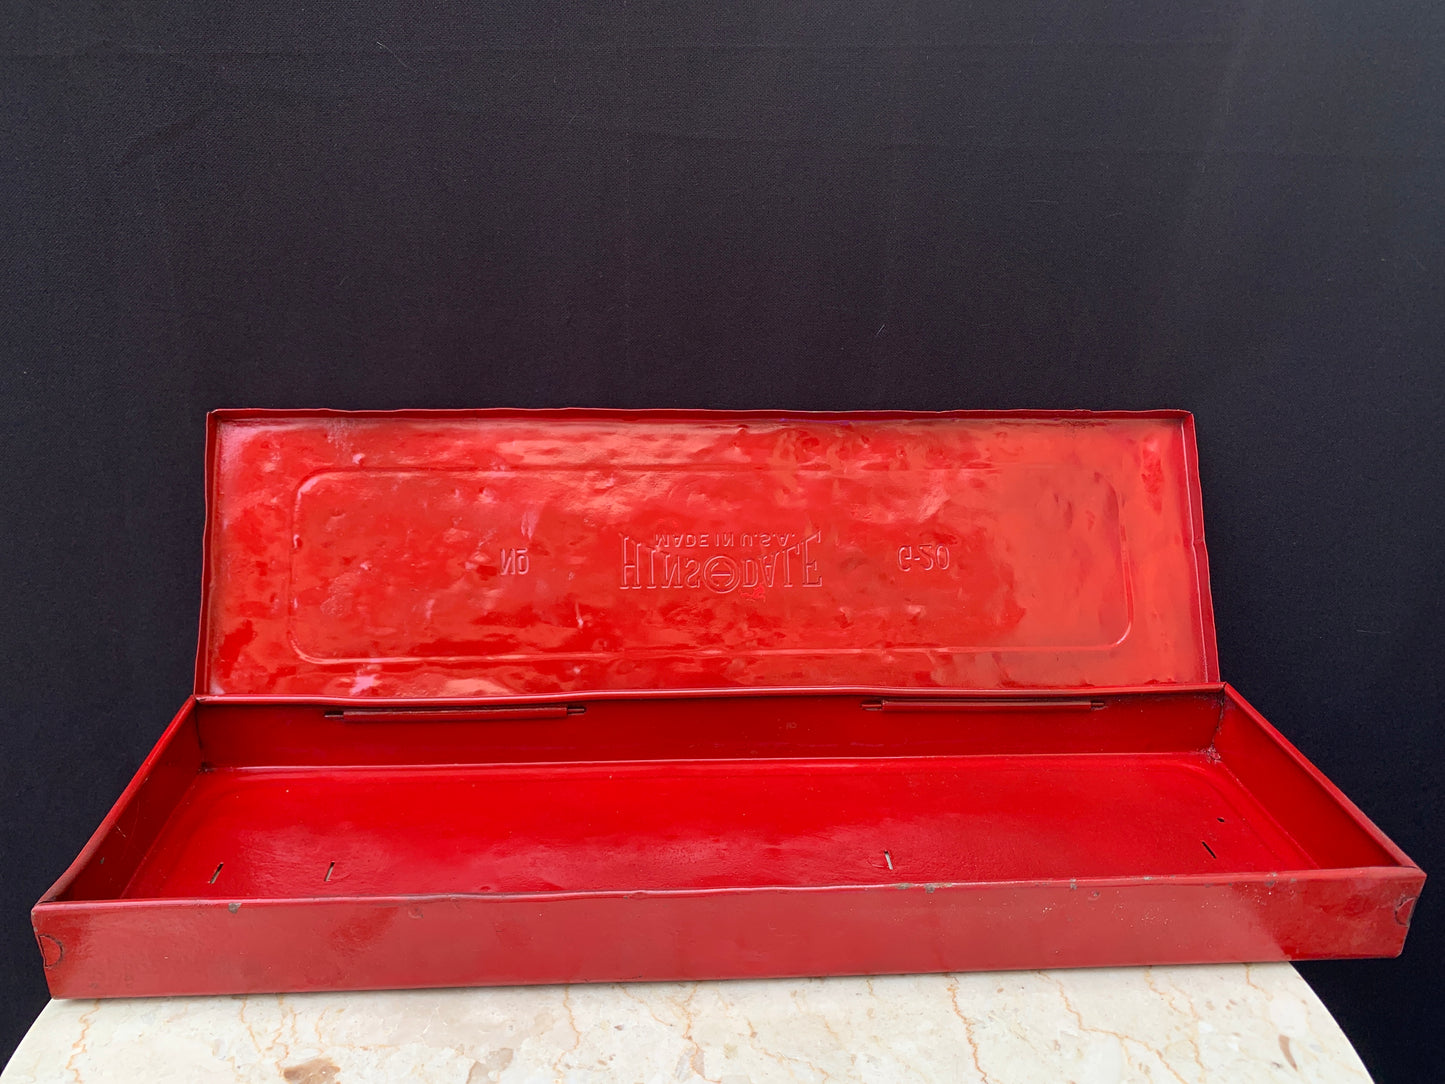 Vintage Red Toolbox Thin Red Metal Tool Box Vintage Garage Decor